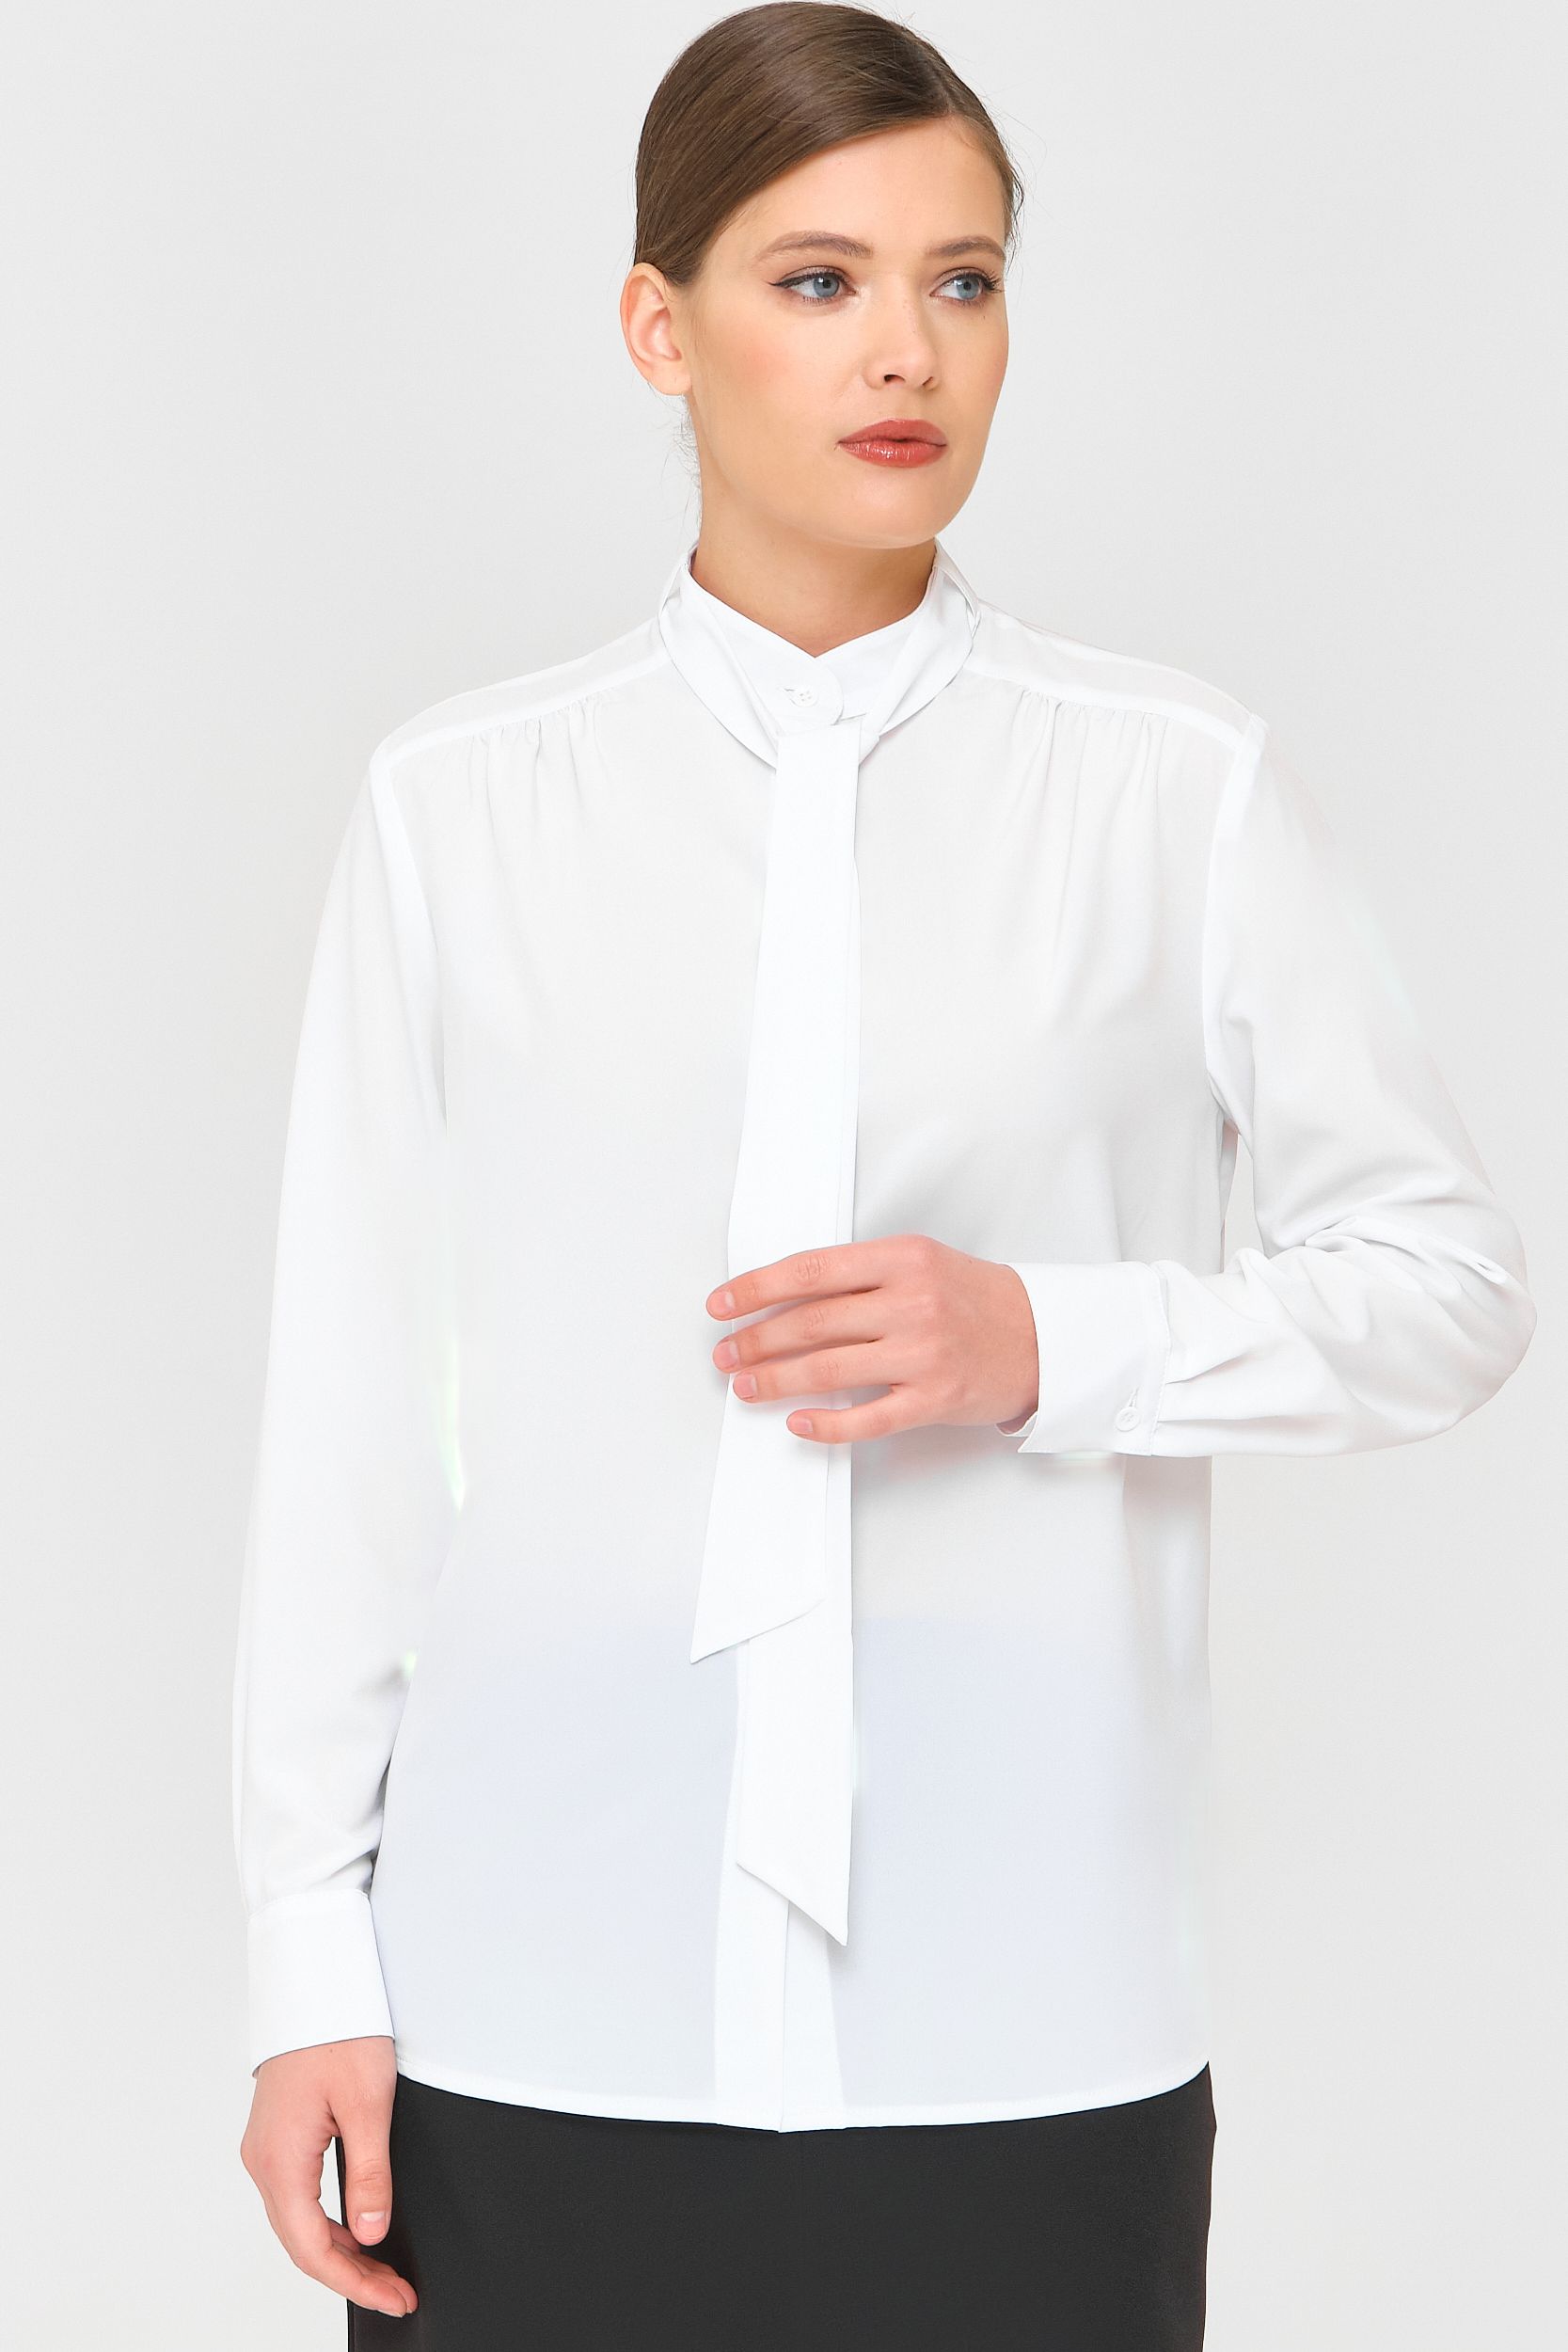 Белая блузка с бантом Priz-230843-4719-00 цена-2488 р. в интернет магазинеbeauti-full.ru